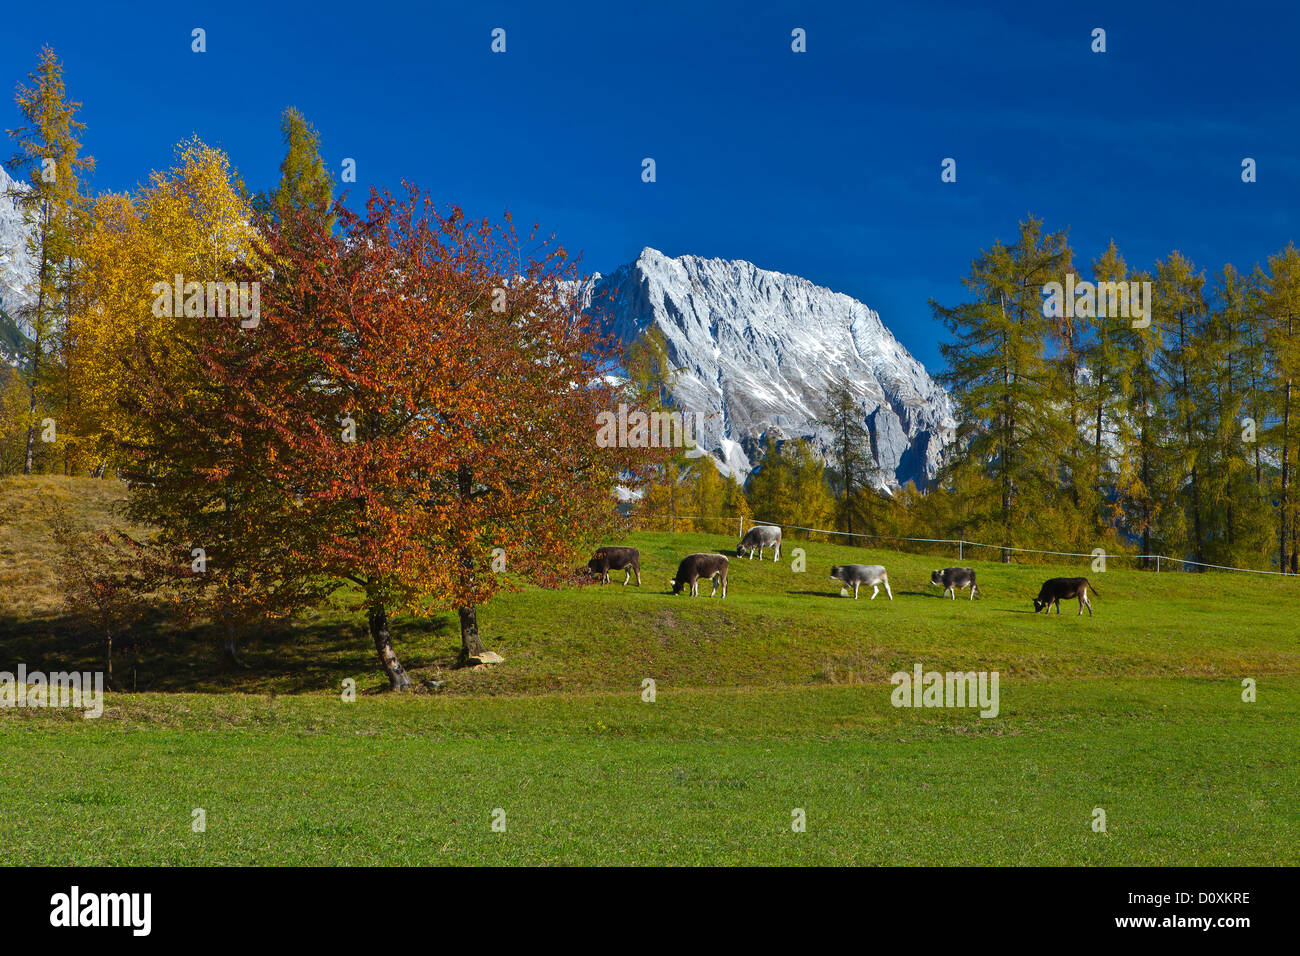 Austria, Europe, Tyrol, Tirol, Mieming, chain, plateau, Obsteig, meadow, green, calves, cattle, Six, trees, Red, Yellow, blue, c Stock Photo